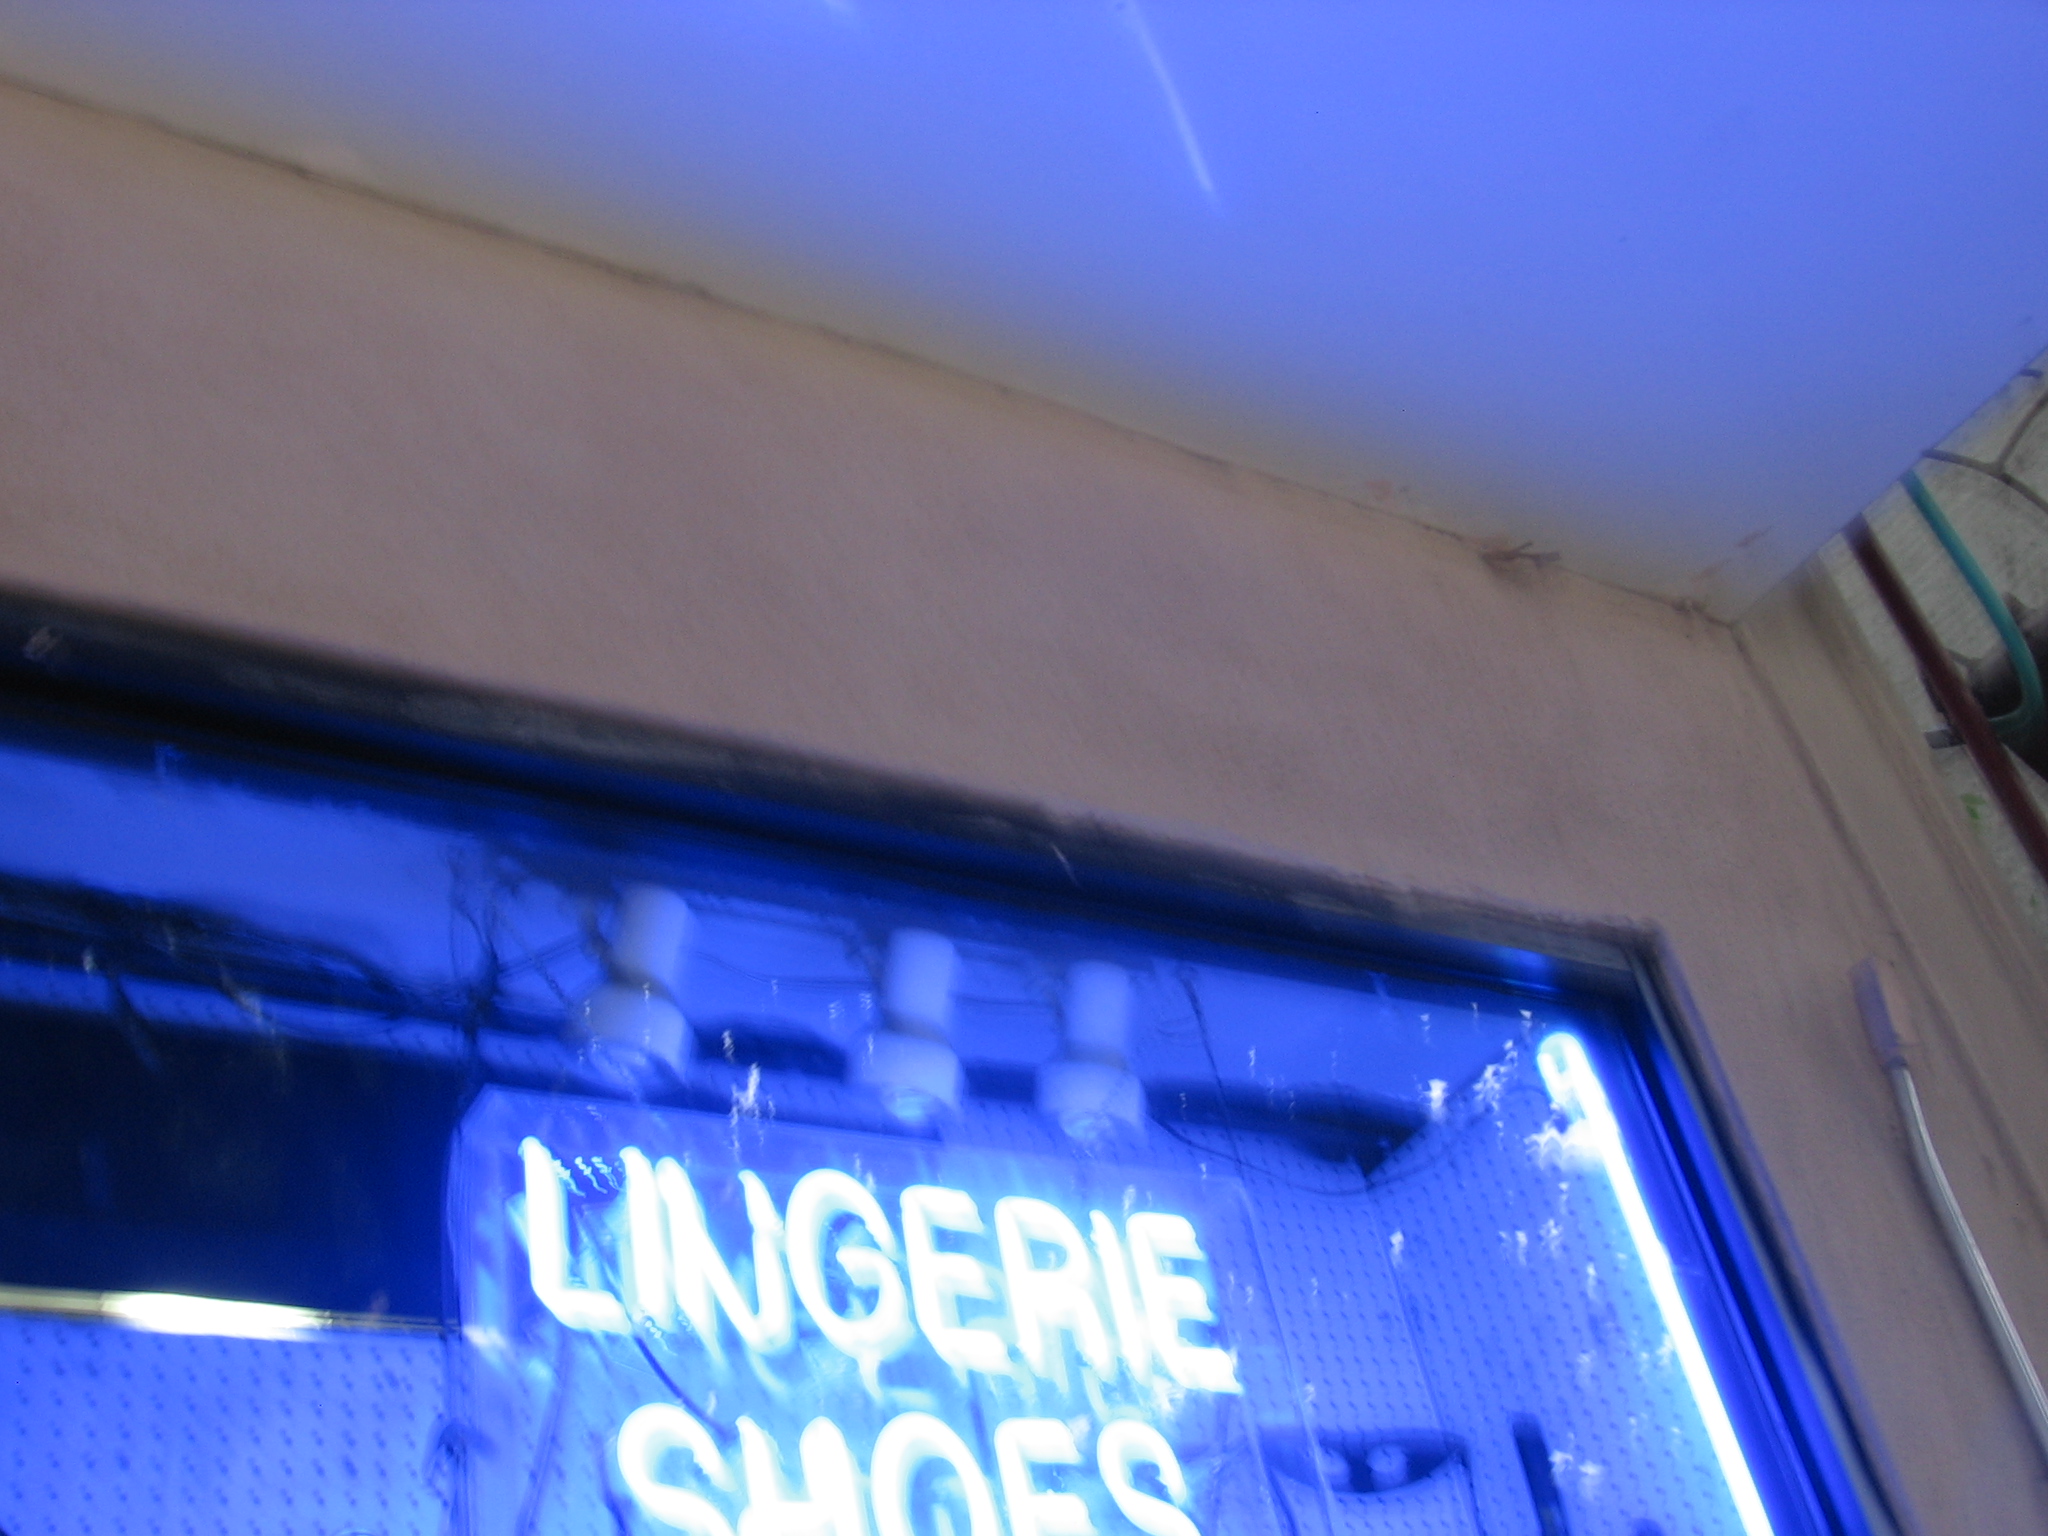 Lingerie-shoes neon sign.JPG